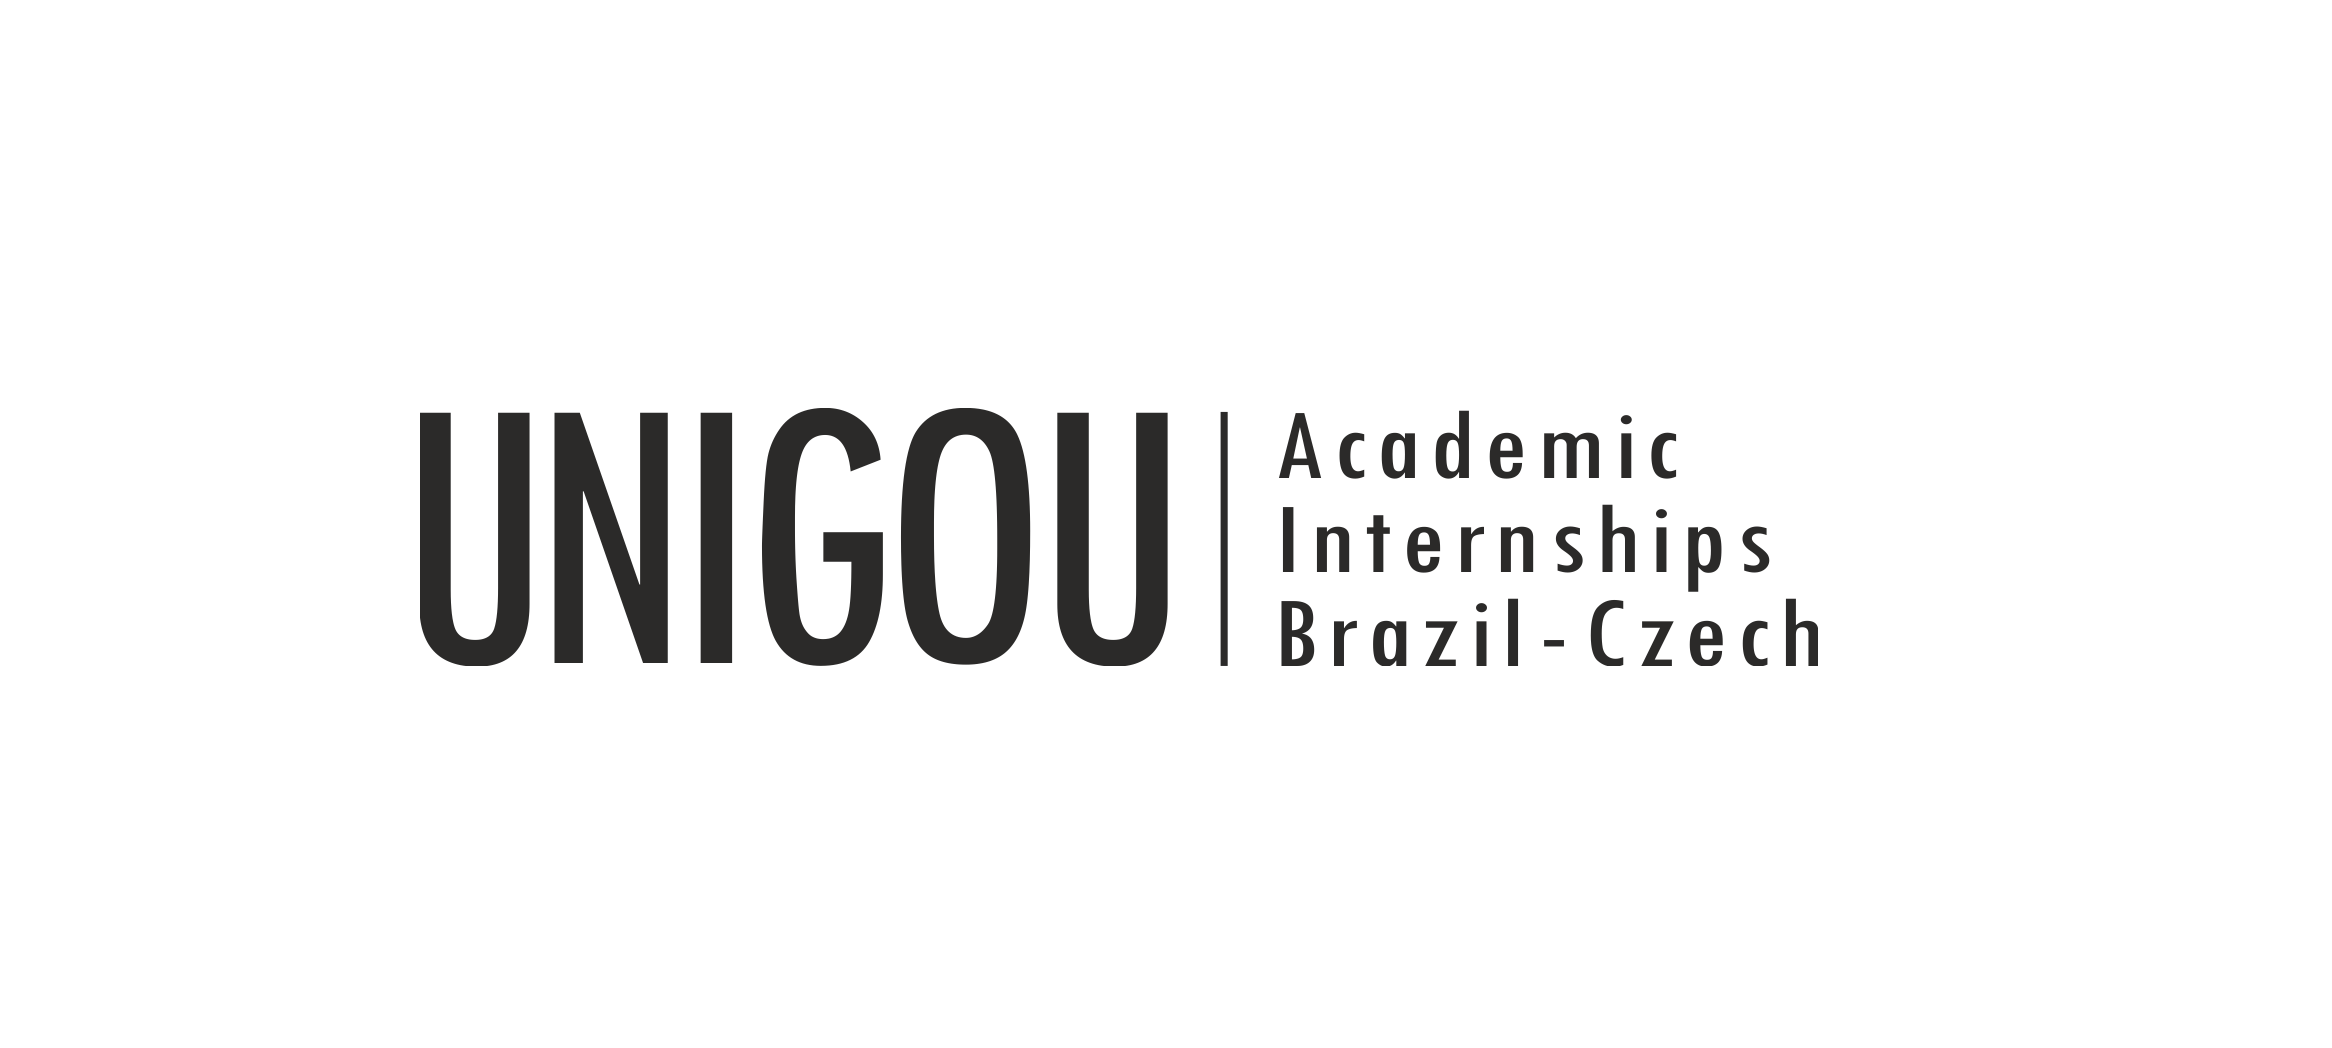 UNIGOU Academic Internships – UNIGOU REMOTE 2023